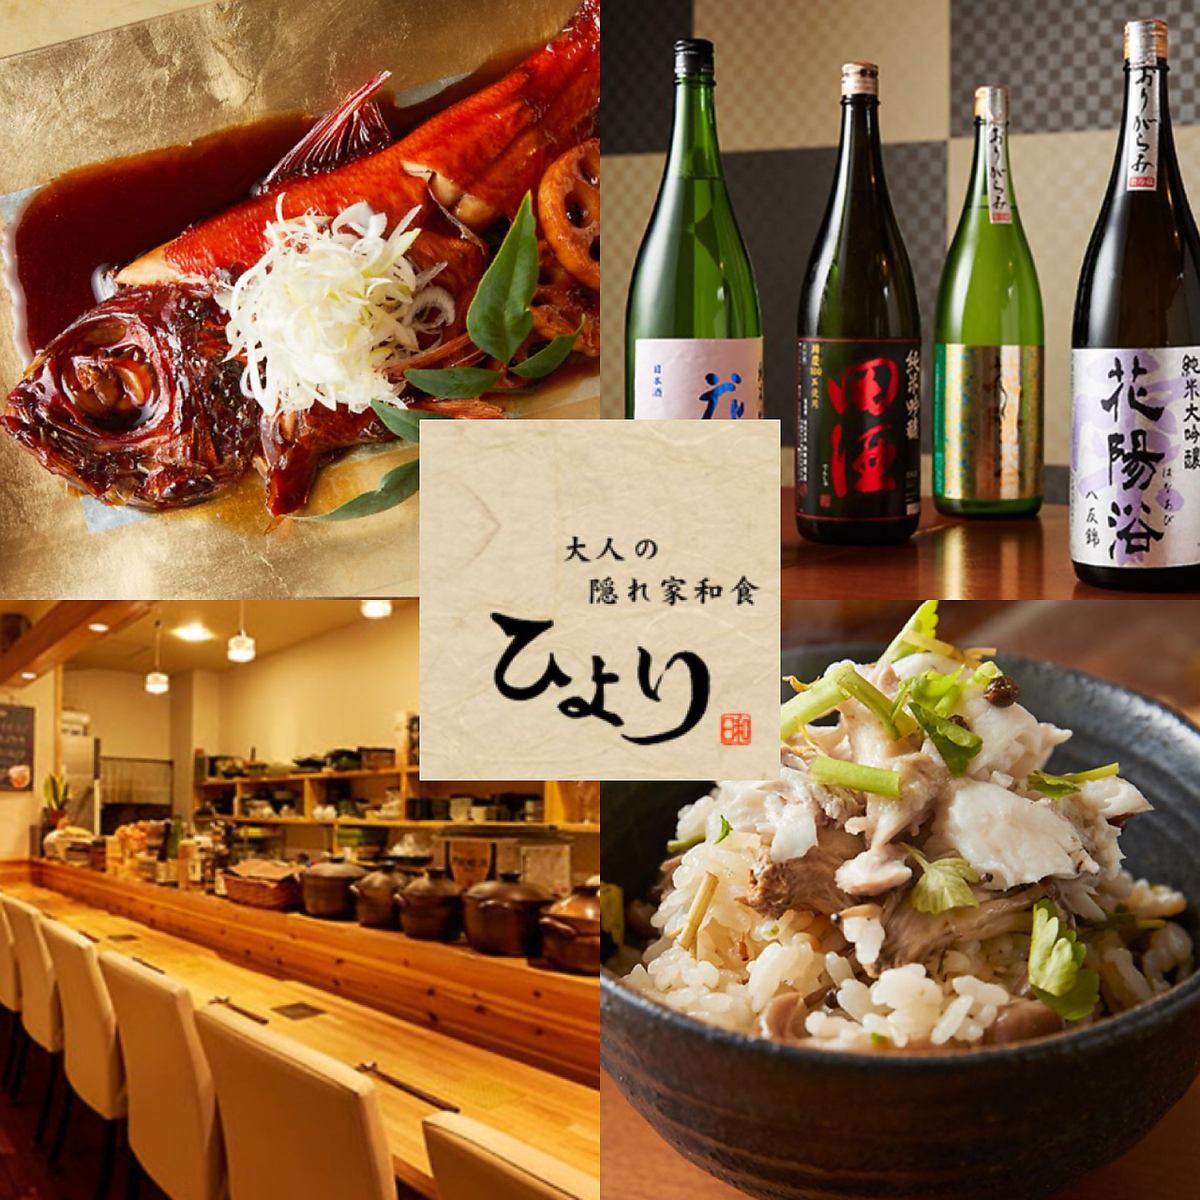 [Ebina Station] An adult Japanese izakaya where you can enjoy seasonal creative Japanese food and sake